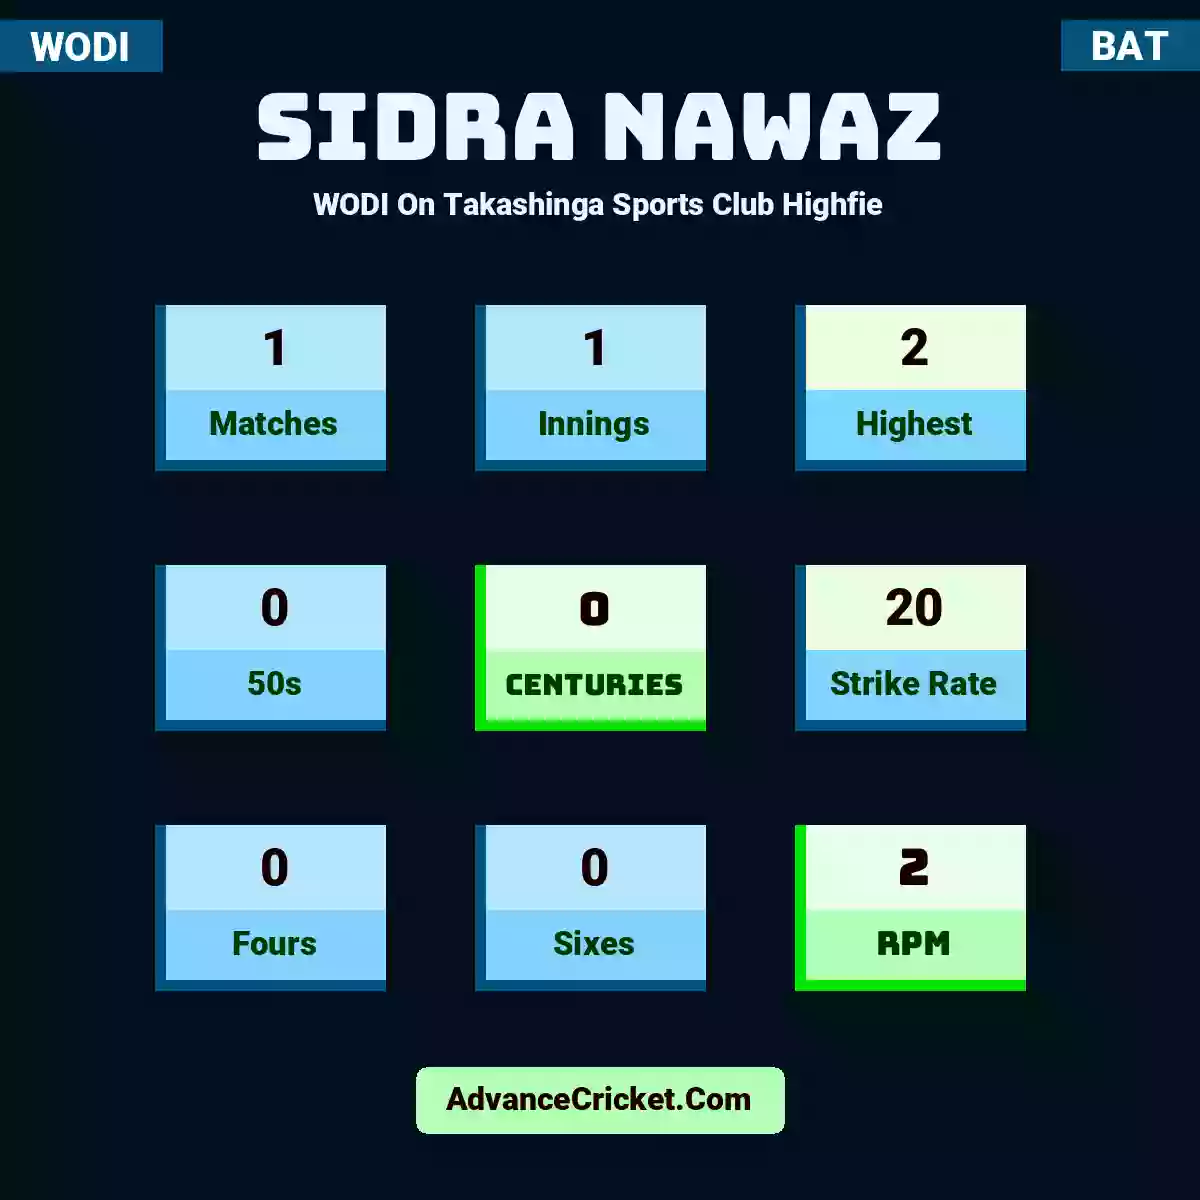 Sidra Nawaz WODI  On Takashinga Sports Club Highfie, Sidra Nawaz played 1 matches, scored 2 runs as highest, 0 half-centuries, and 0 centuries, with a strike rate of 20. S.Nawaz hit 0 fours and 0 sixes, with an RPM of 2.